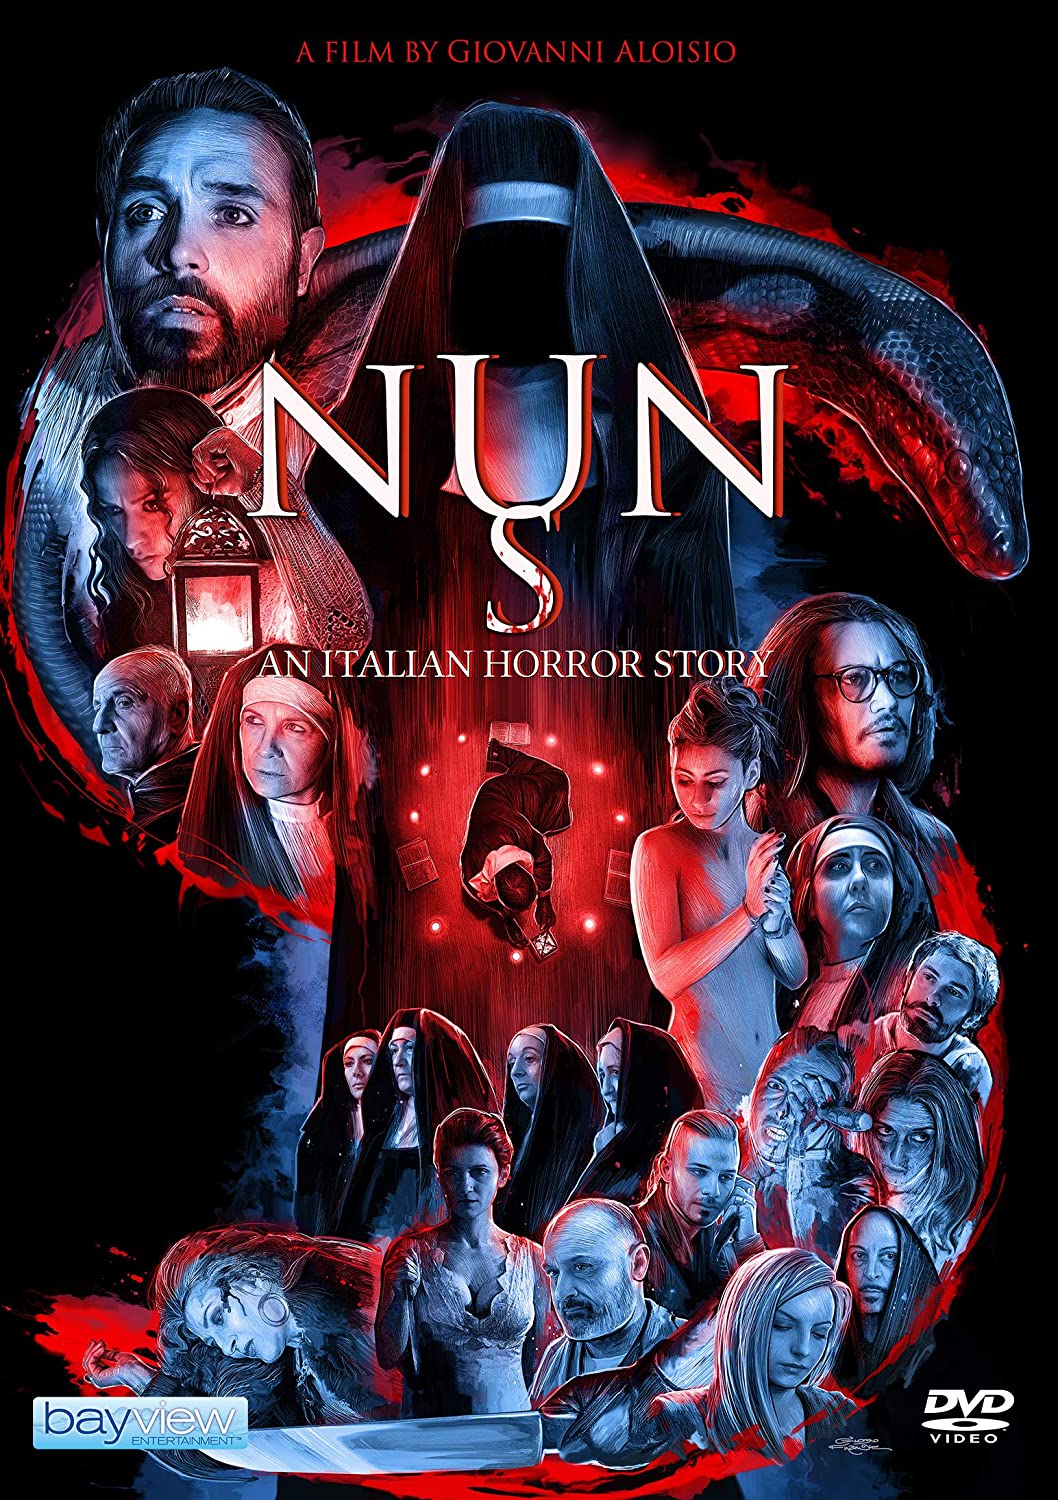 Nuns – comes to DVD & Digital February 16